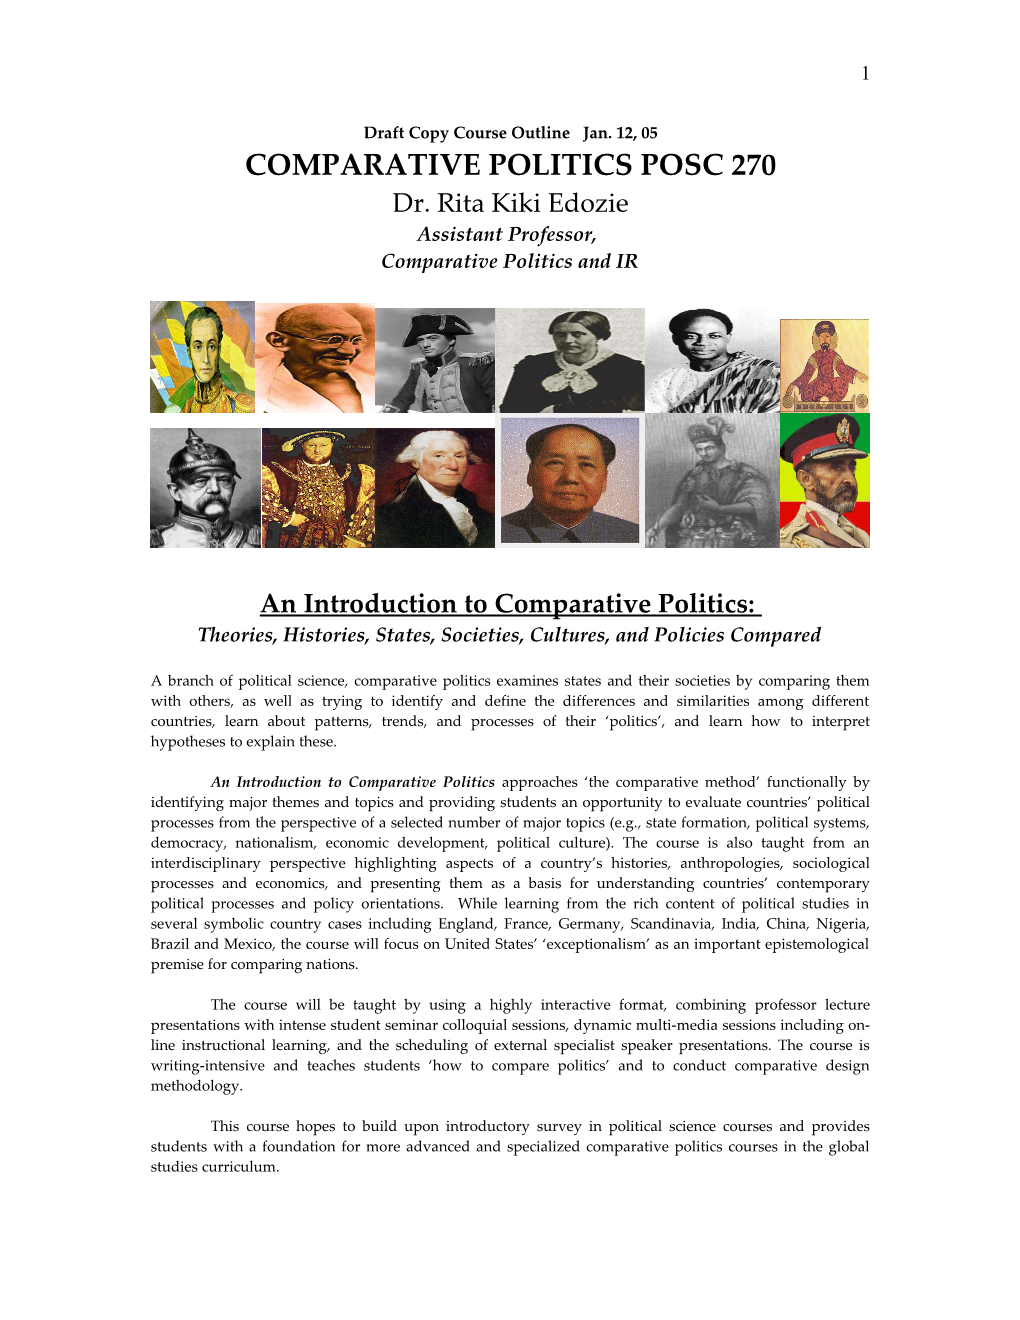 Comparative Politics Posc 270 s1